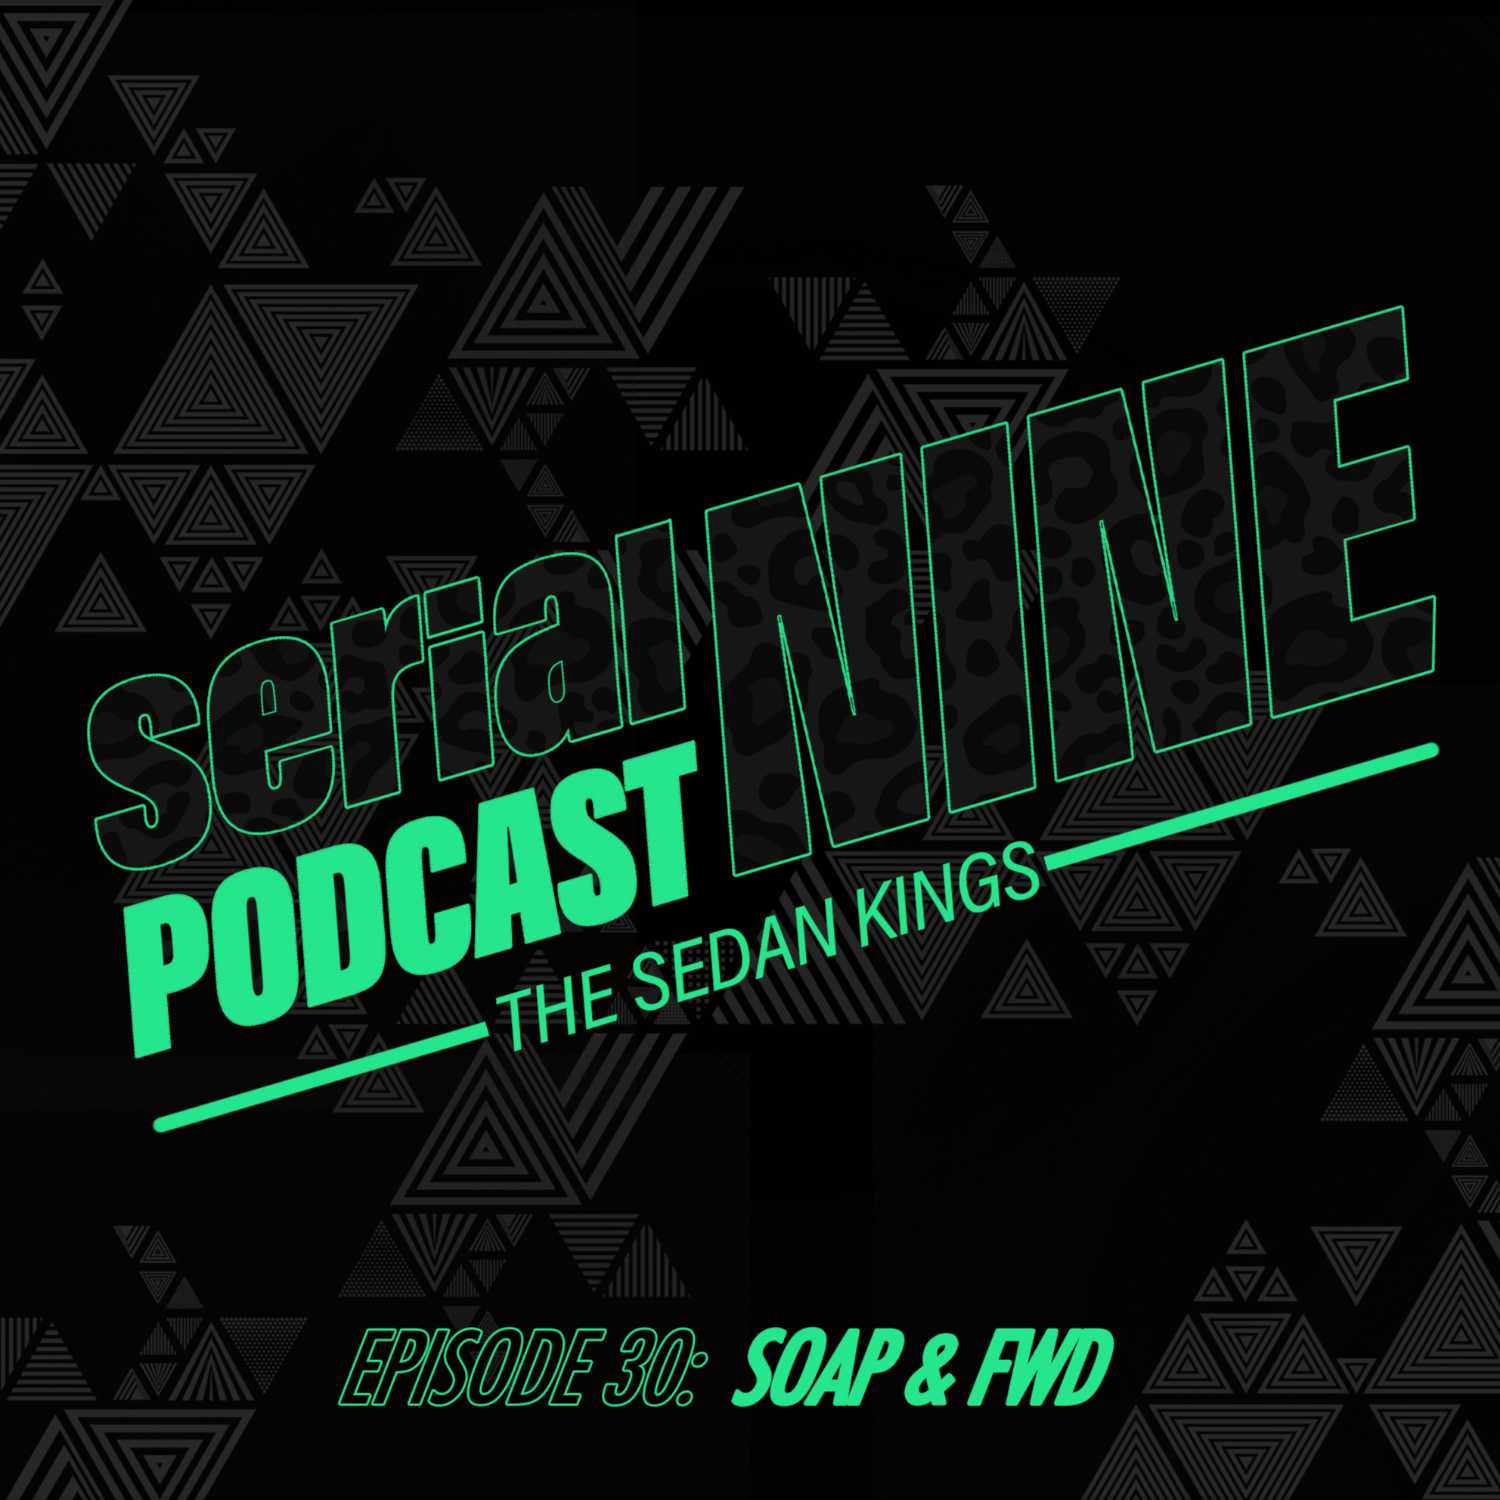 SerialPodcastNine Episode 30 SOAP & FWD